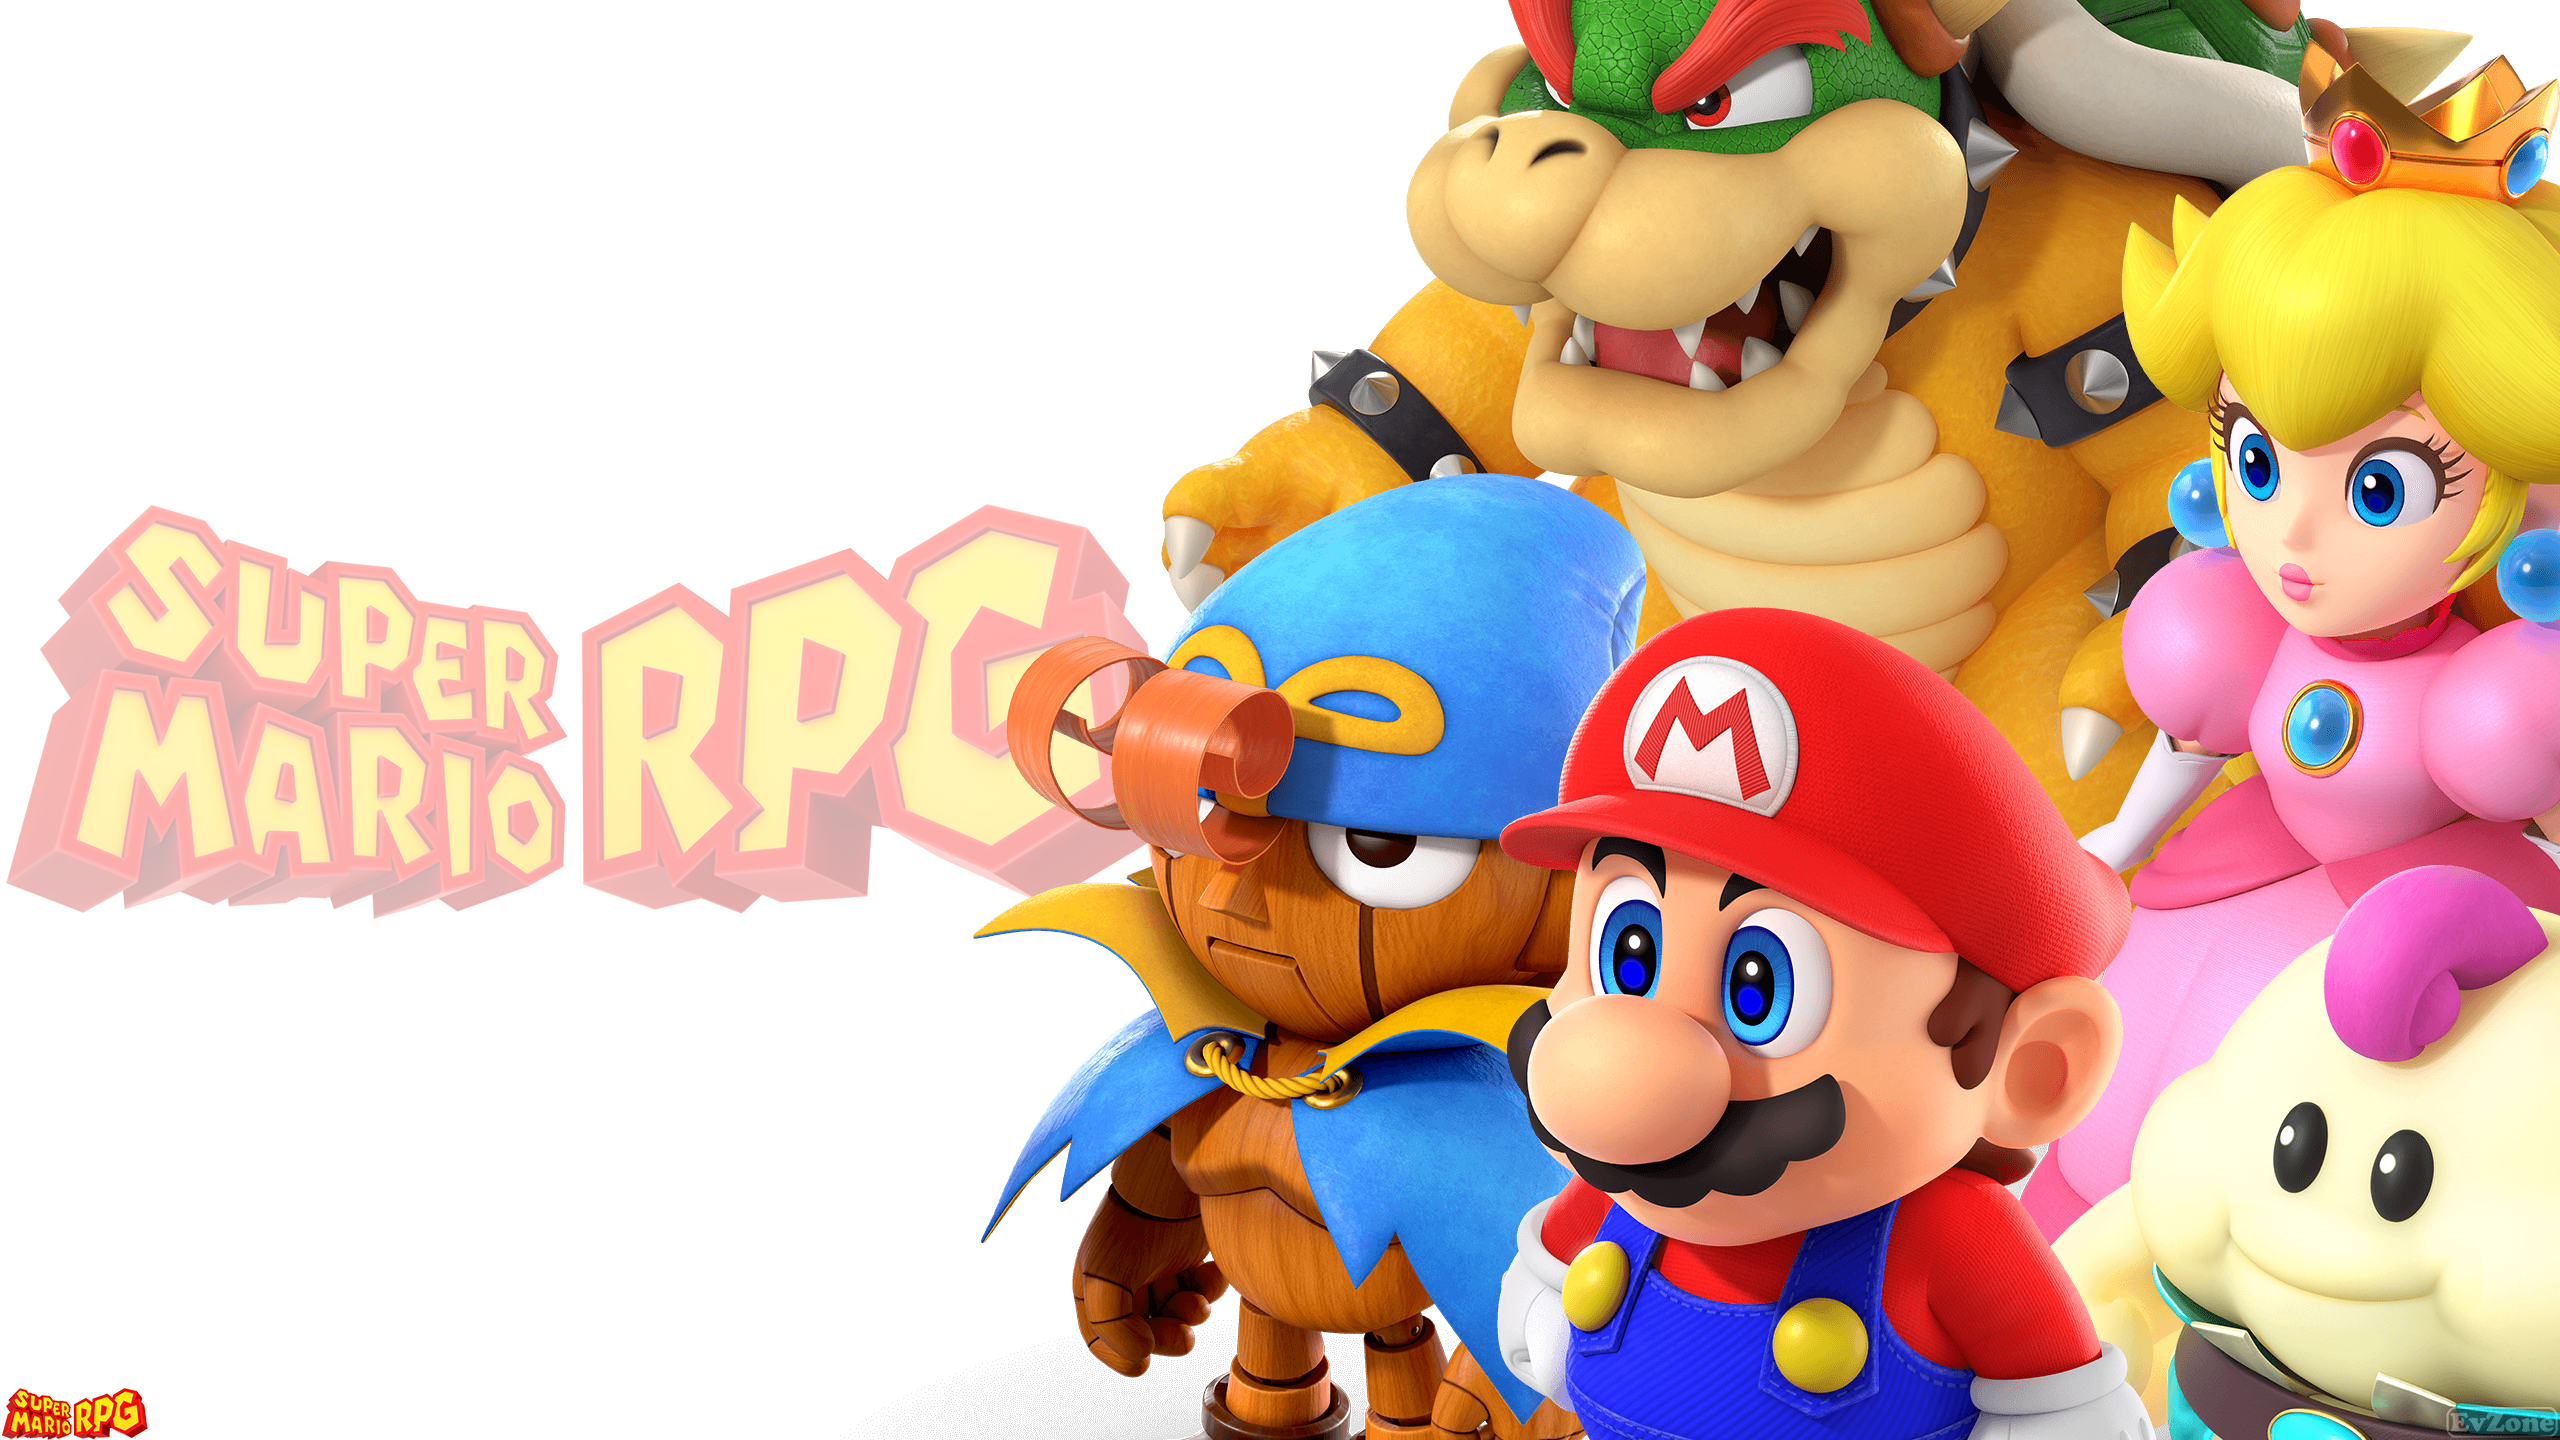 Super Mario Rpg Mario Bowser Princess Peach Digital Art Video Games Simple Background Watermarked 2560x1440